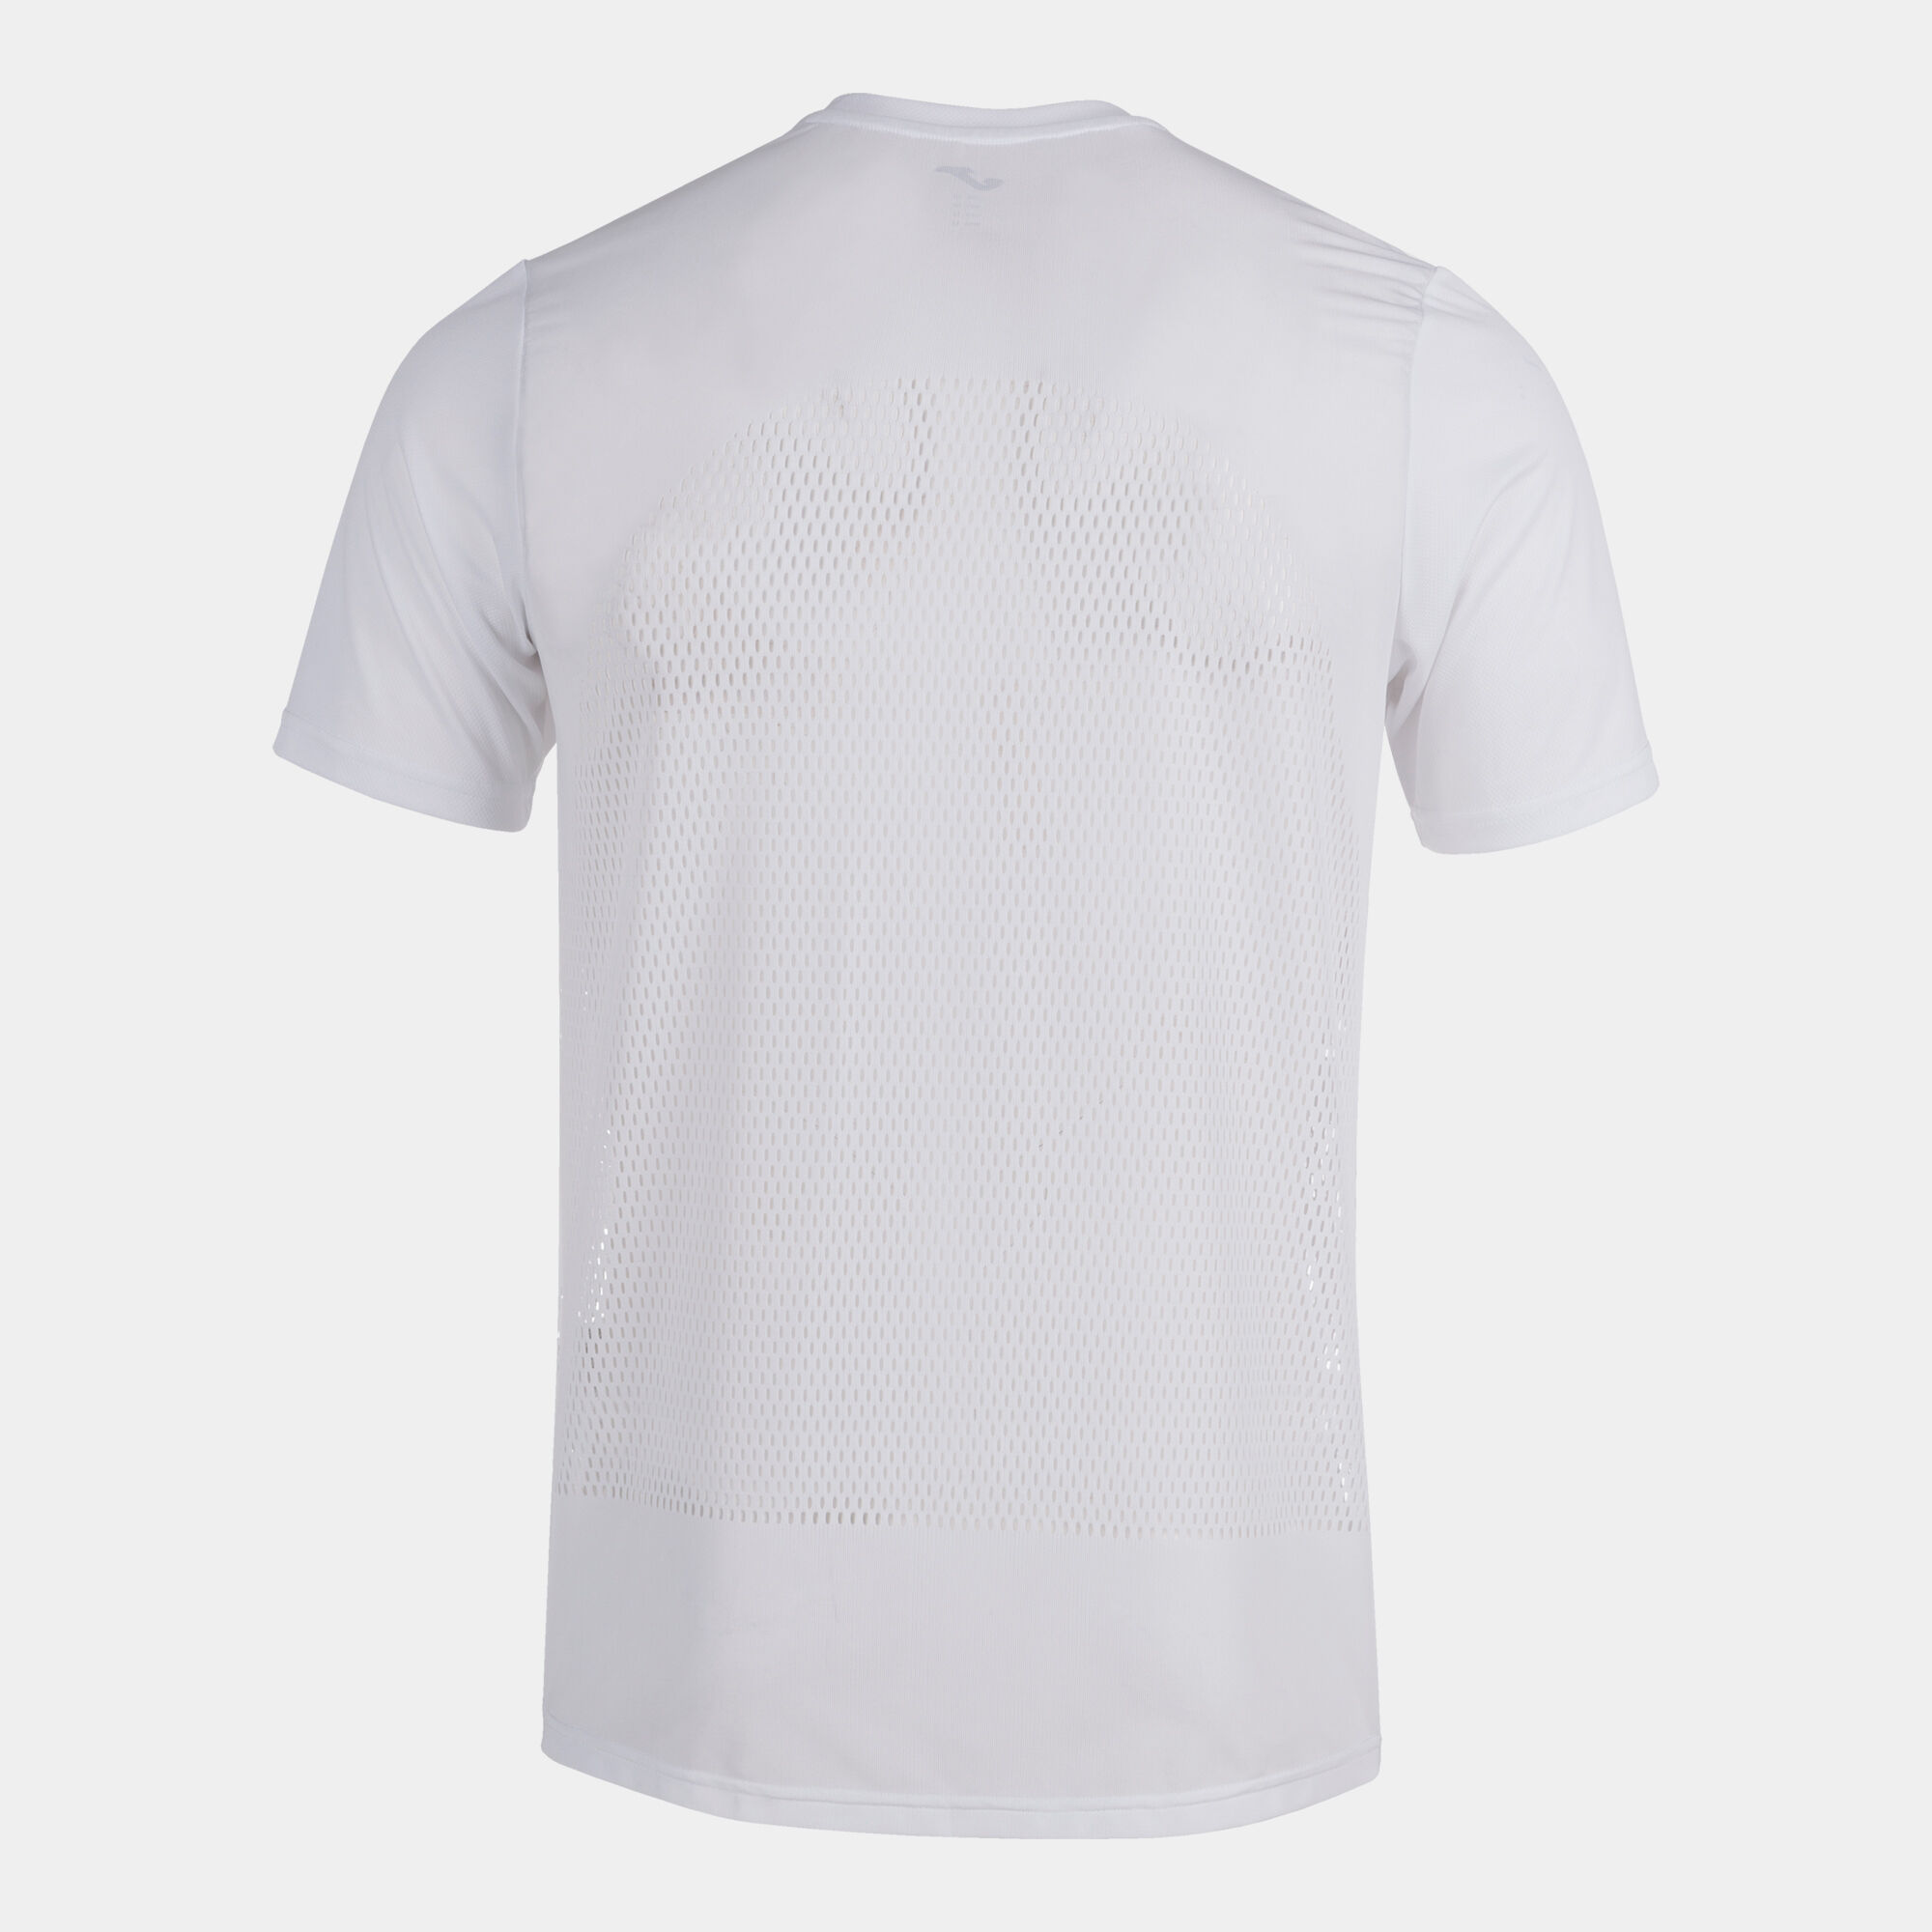 Camiseta manga corta hombre Marathon blanco